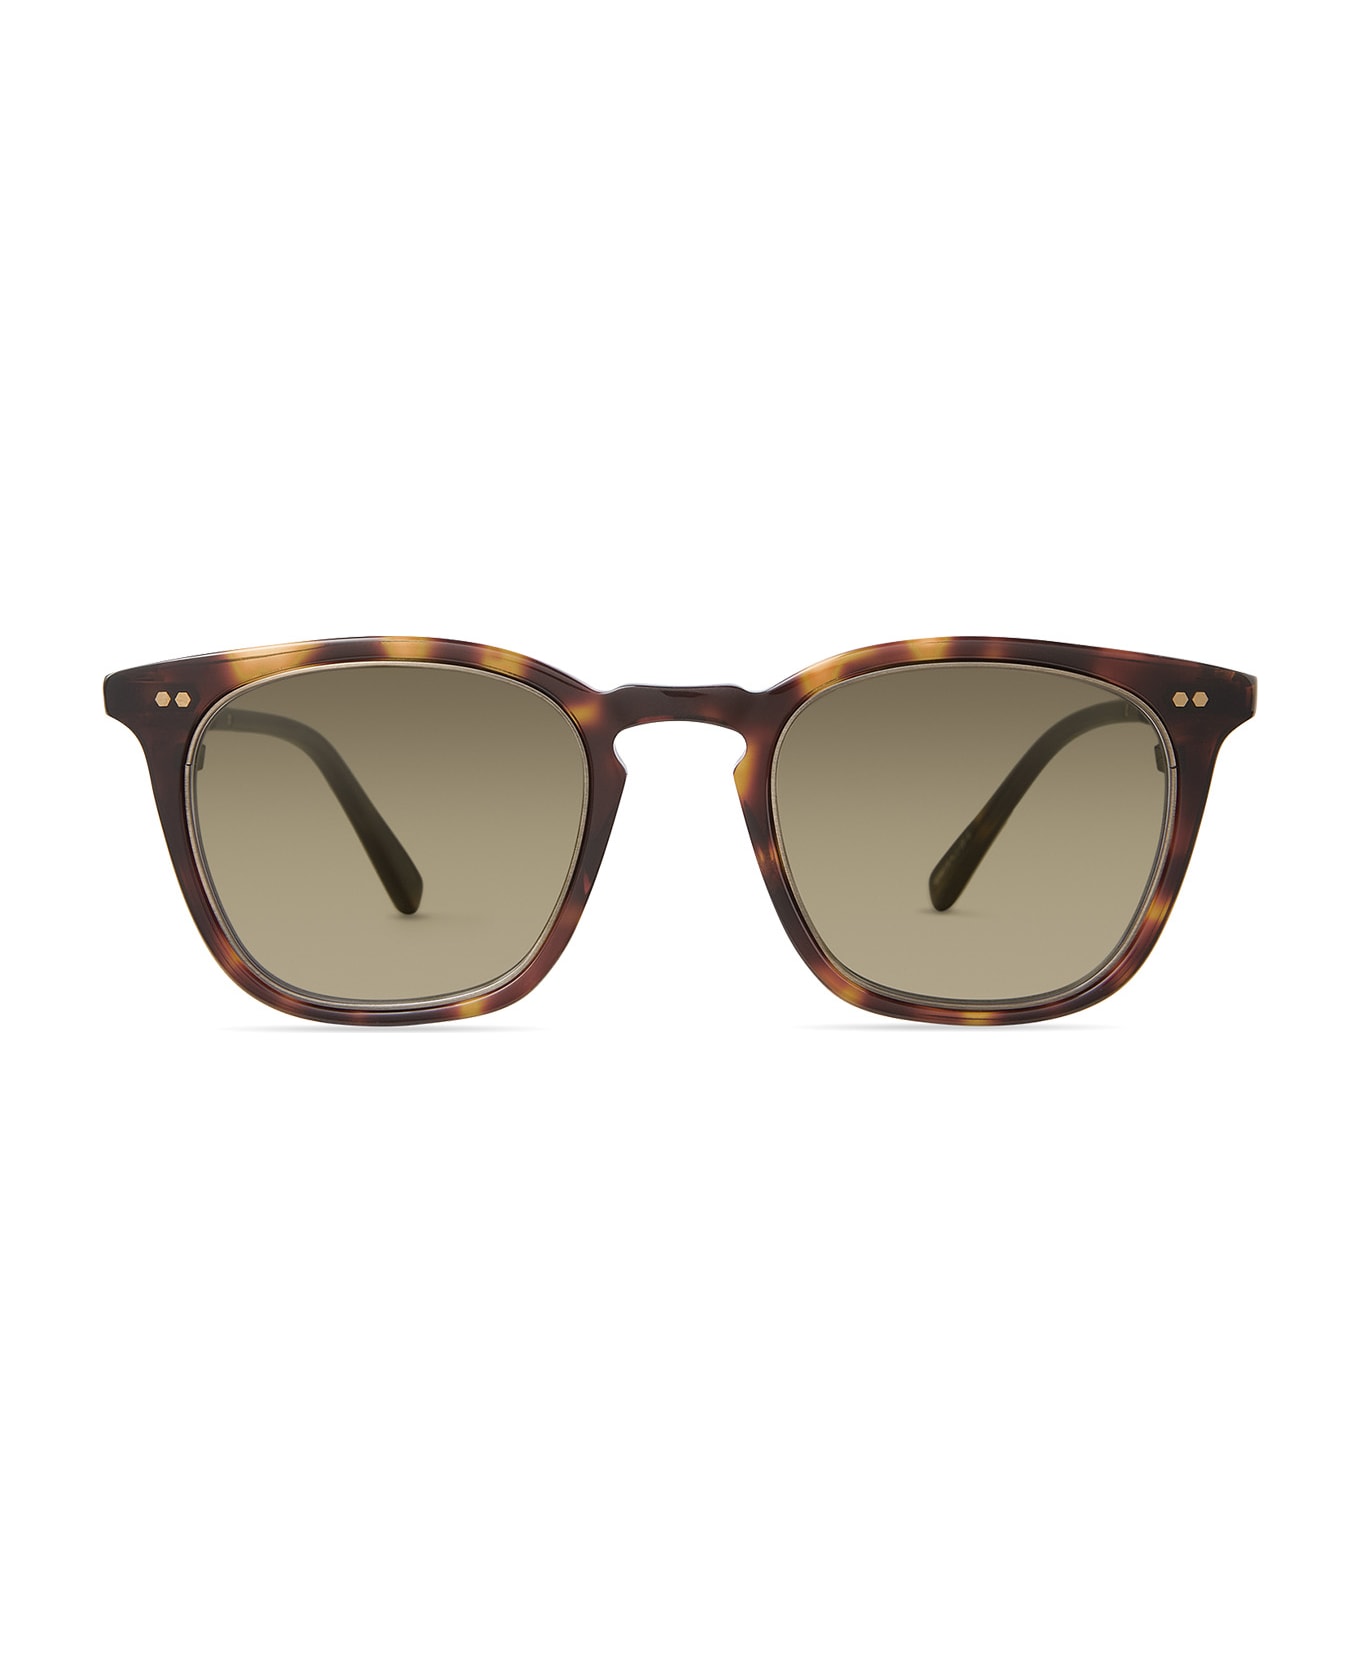 Mr. Leight Getty Ii S Honu Tortoise-antique Gold Sunglasses - Vogue Vo5333s Dark Havana Sunglasses